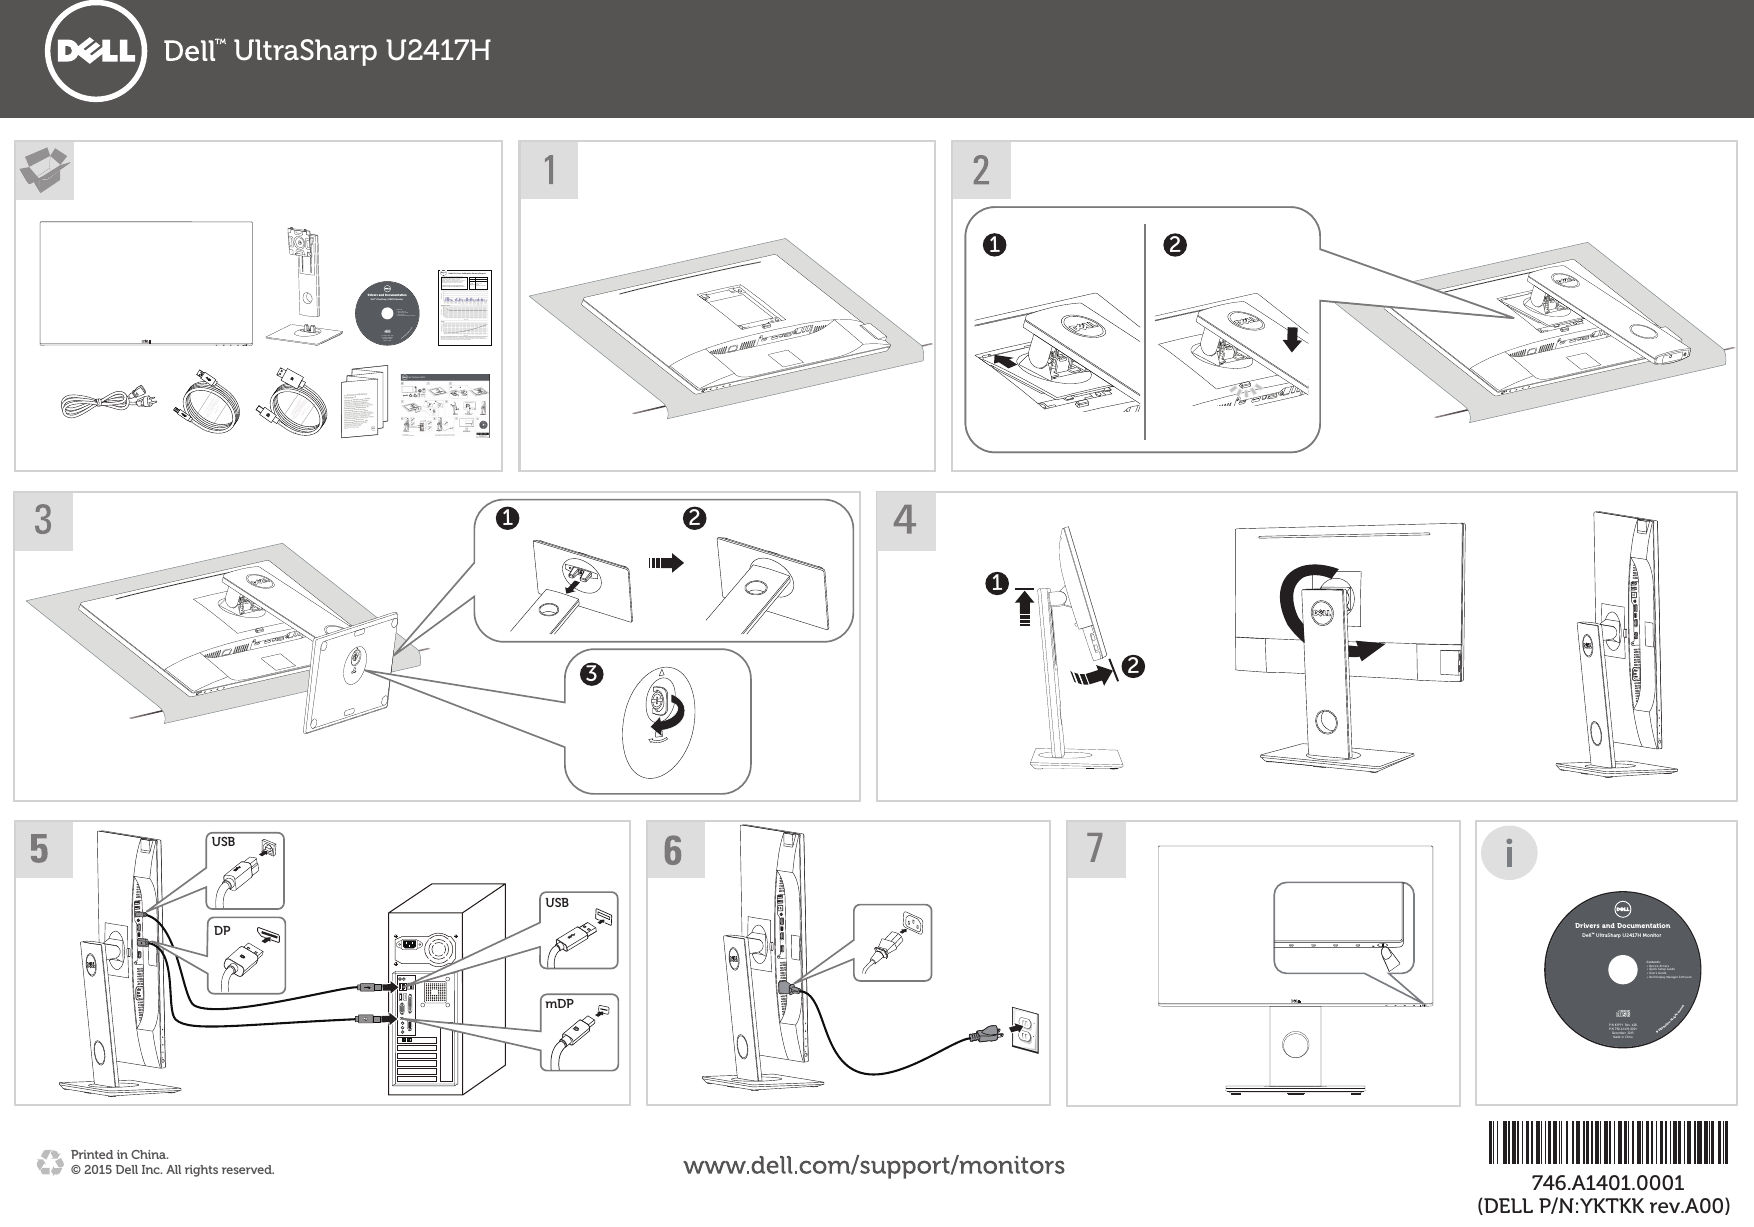 Page 1 of 1 - Dell Dell-u2417h-monitor U2417H Quick Setup Guide User Manual  - En-us